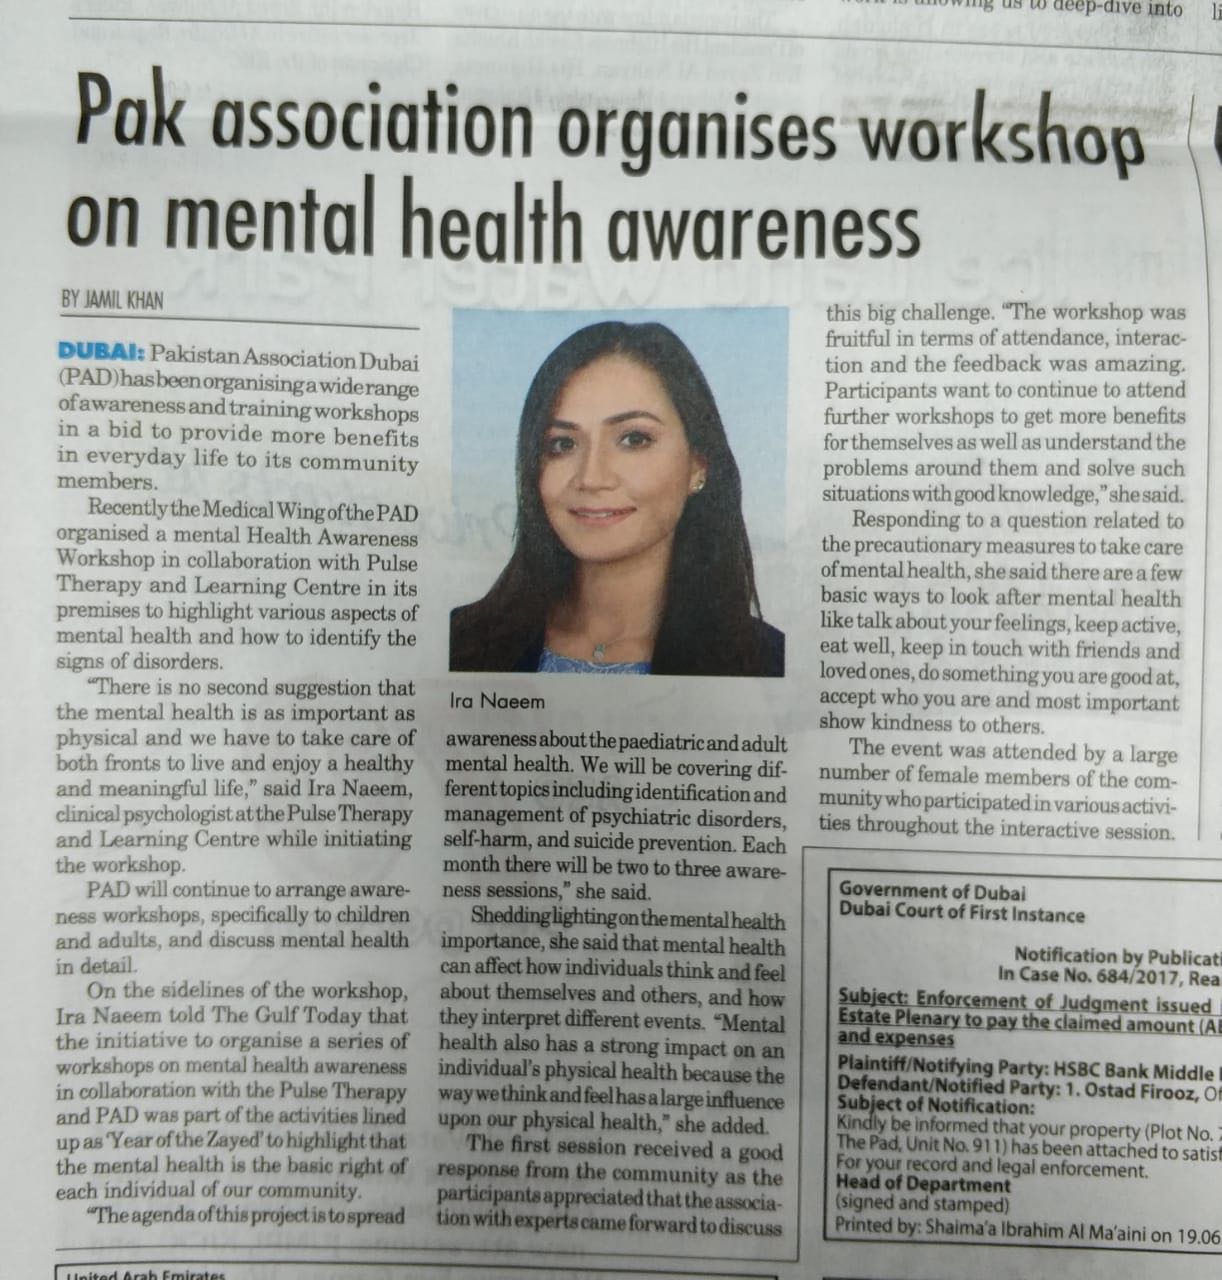 Pak association organises workshop on mental health awareness - The Gulf Today